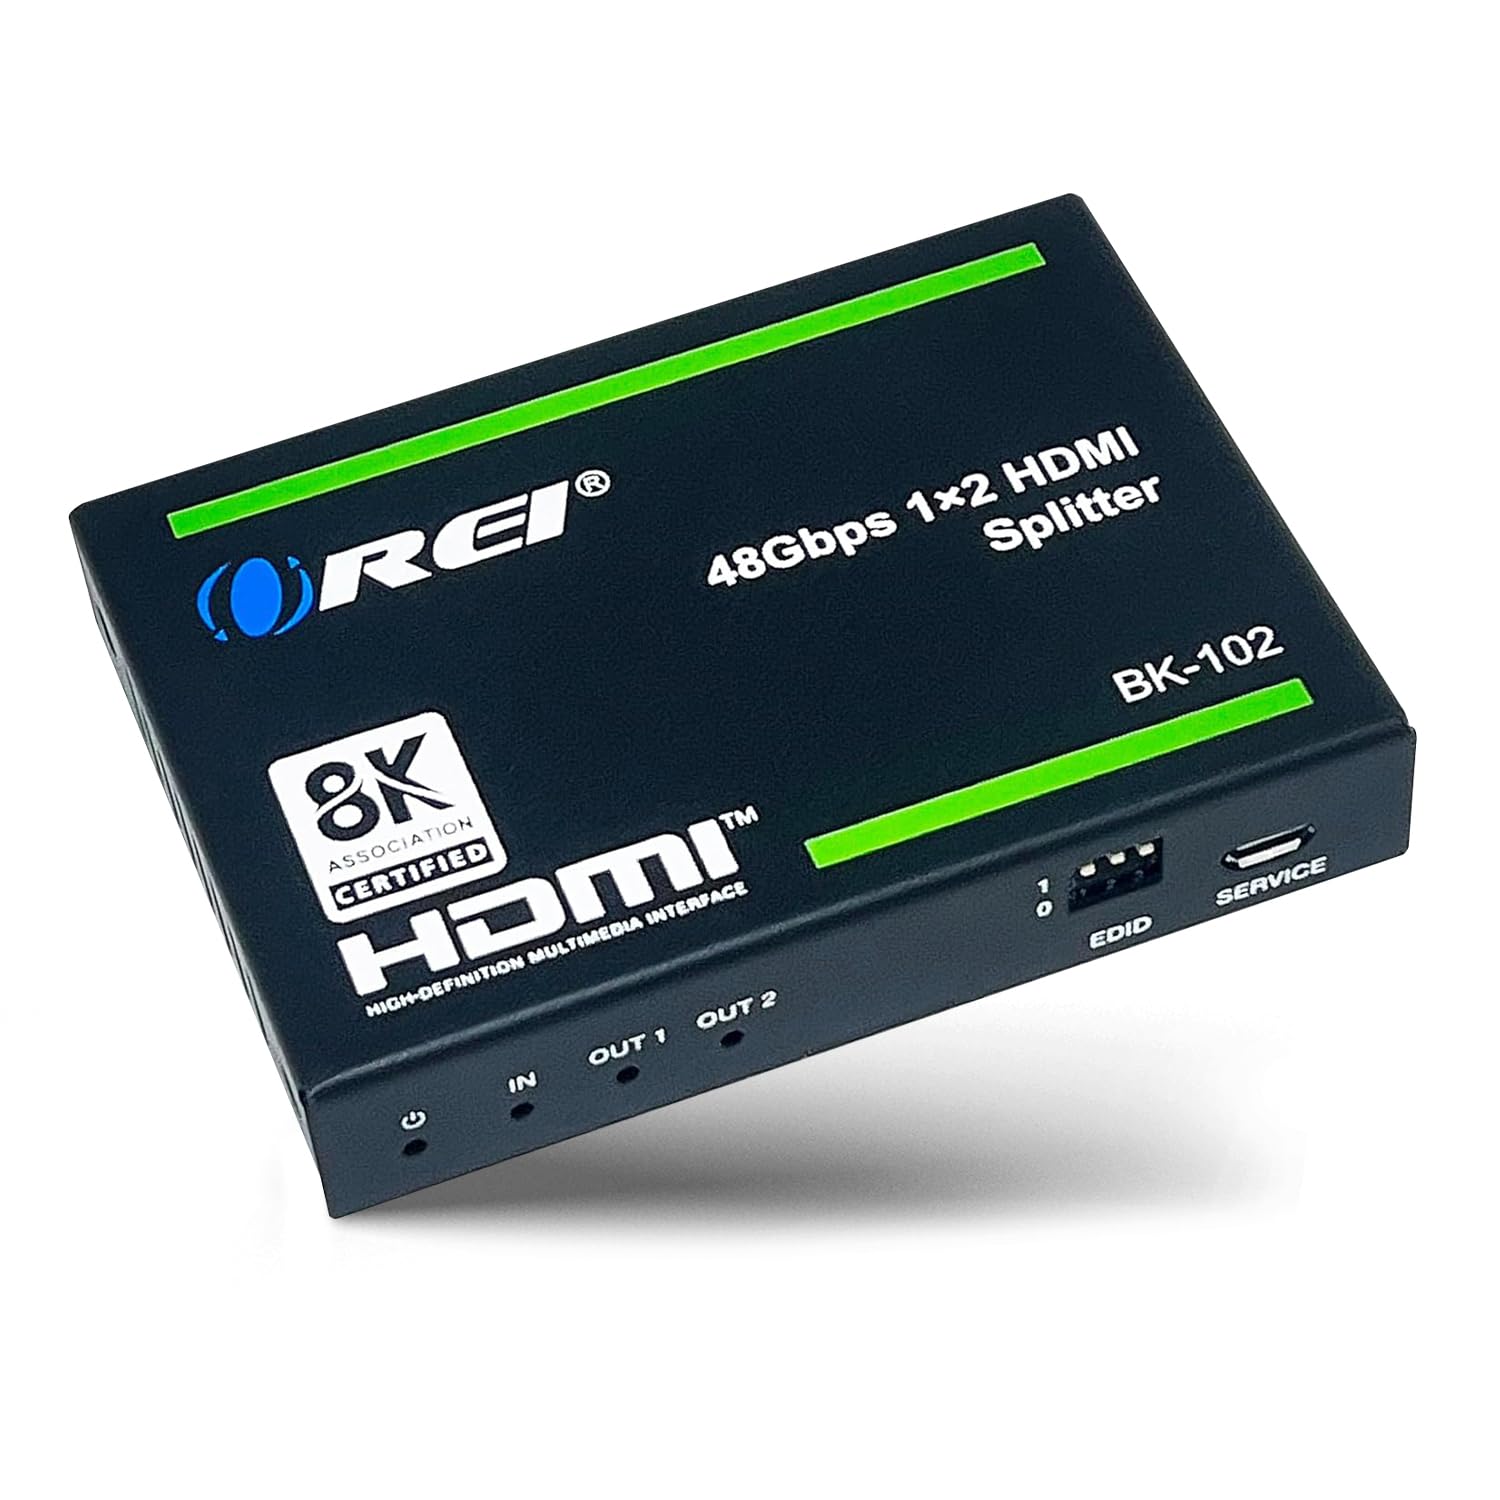 OREI 8K HDMI Splitter 1 X 2, Duplicate/Mirror Any HDMI Signal UltraHD Supports Upto 4K @ 120Hz EDID HDCP 2.3 - (BK-102)